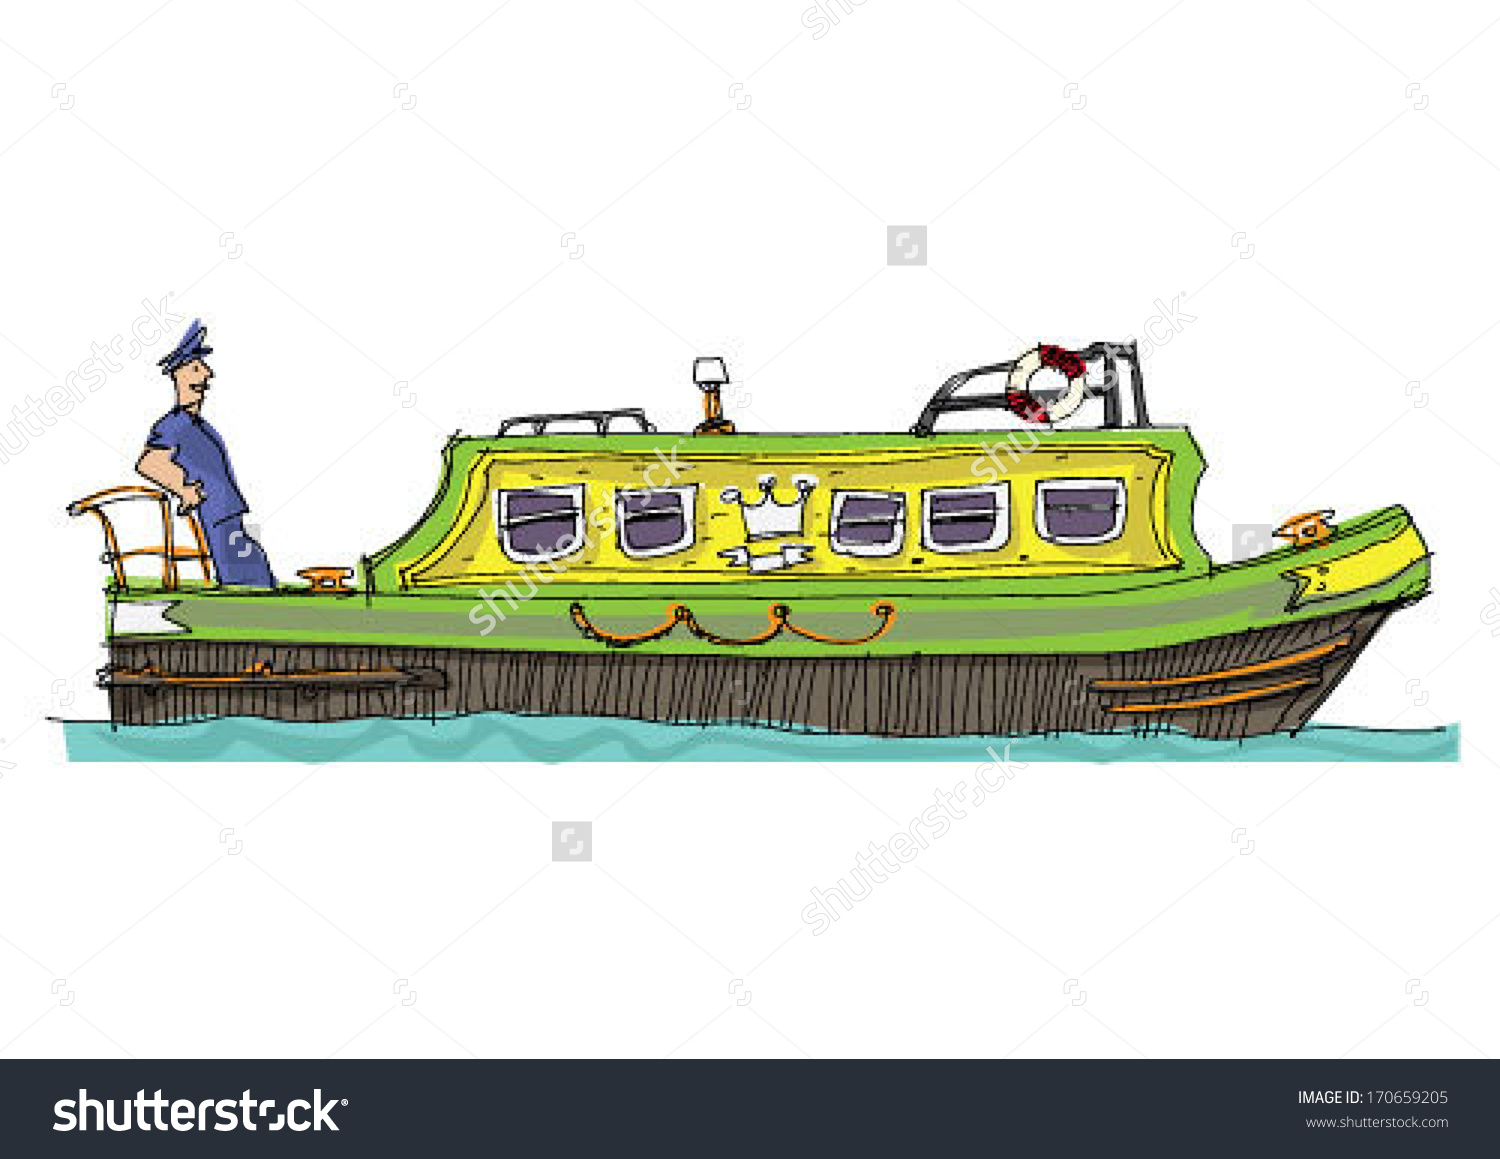 Leisure Barge Cartoon Stock Vector 170659205.